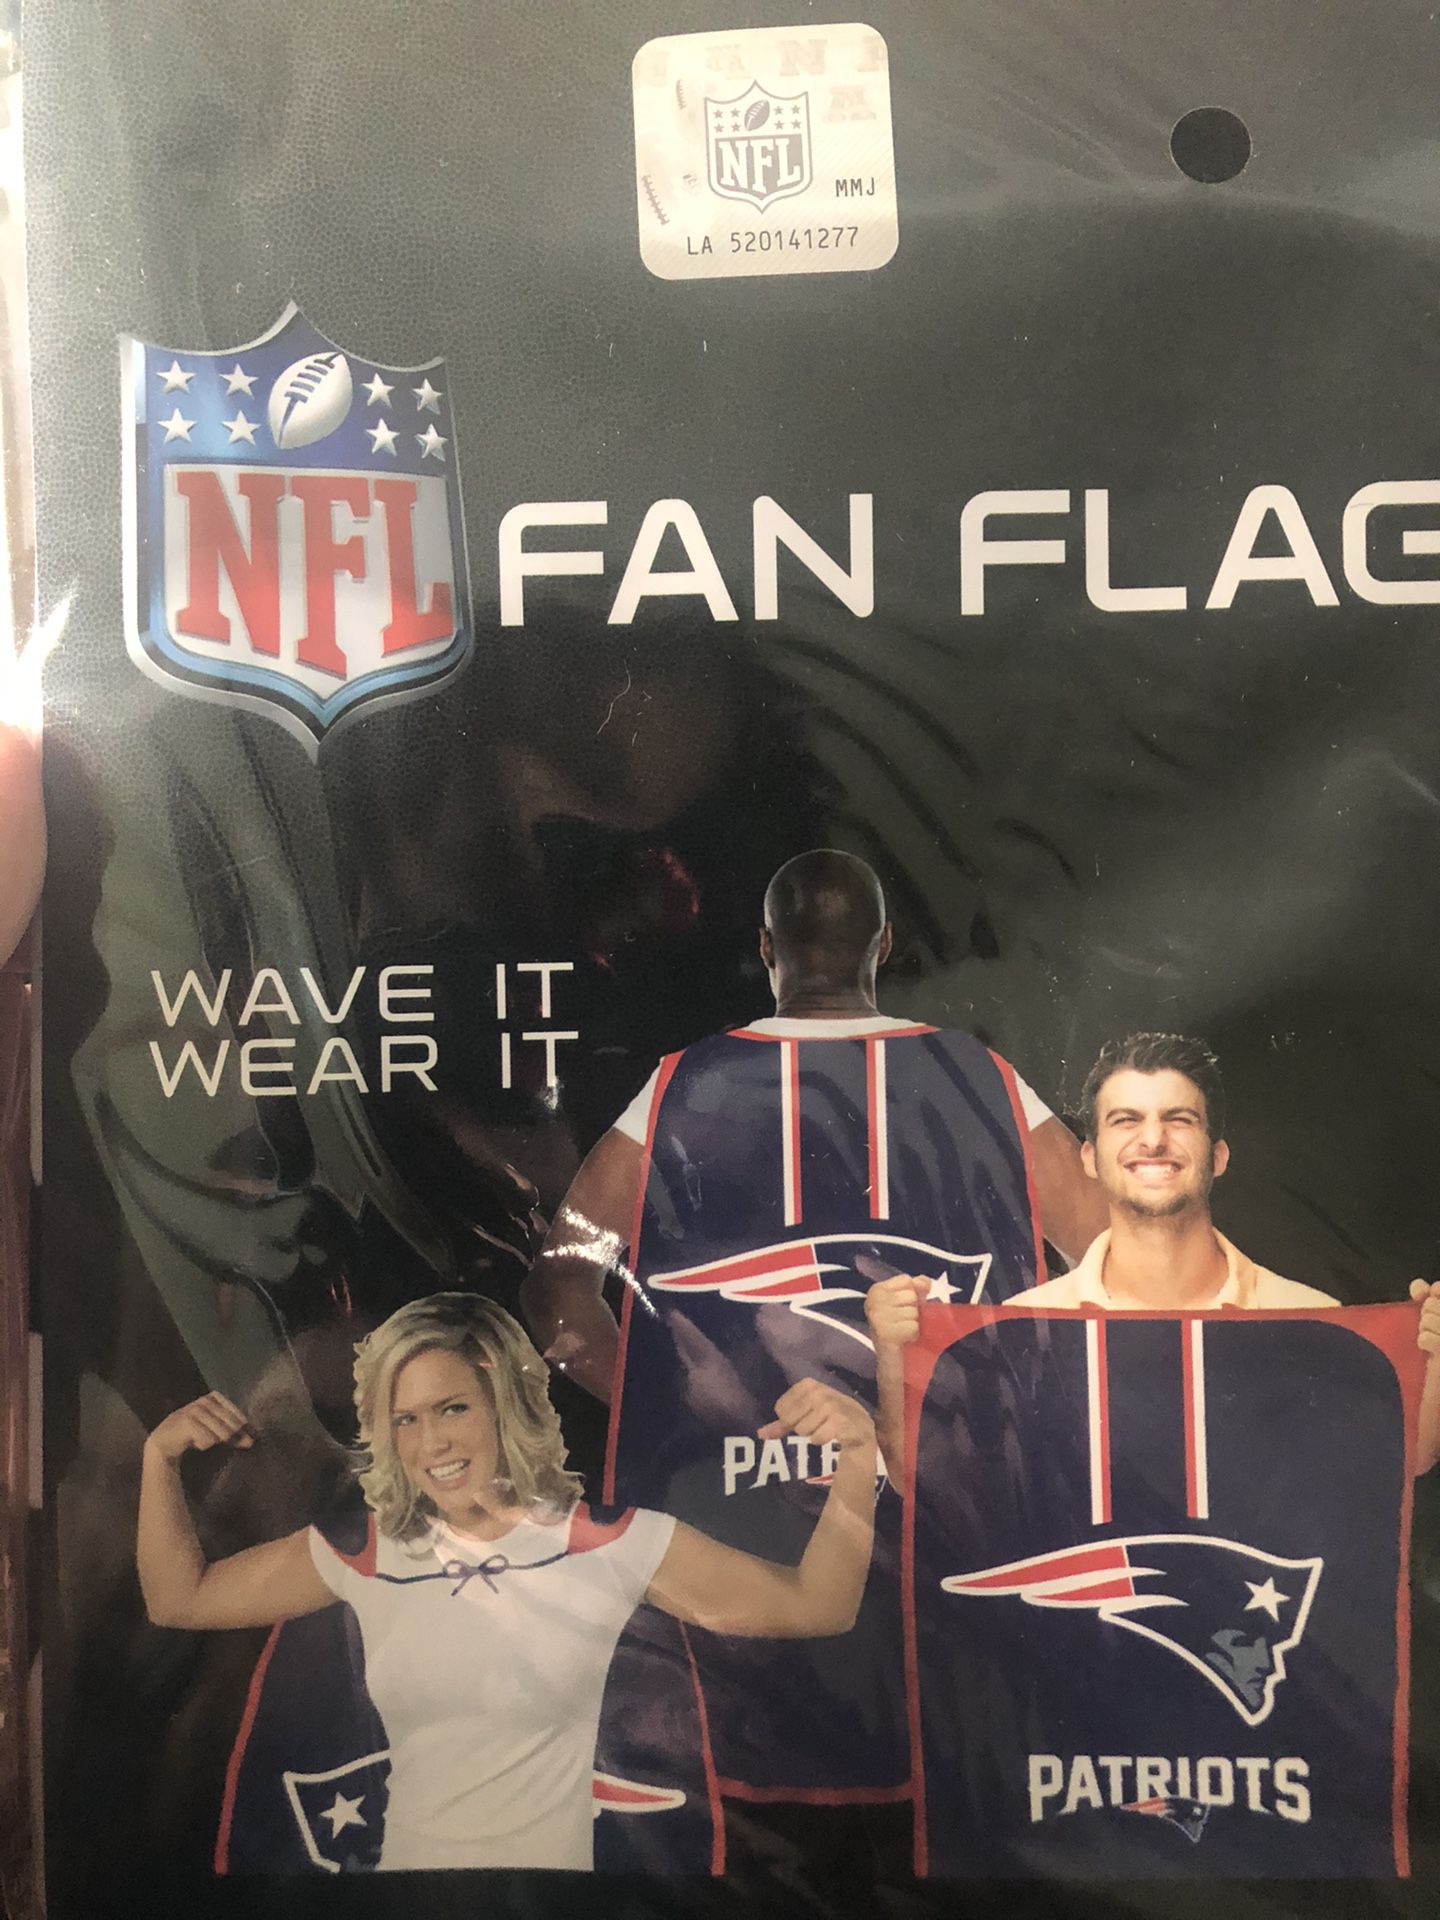 PATRIOTS official NFL fan flag